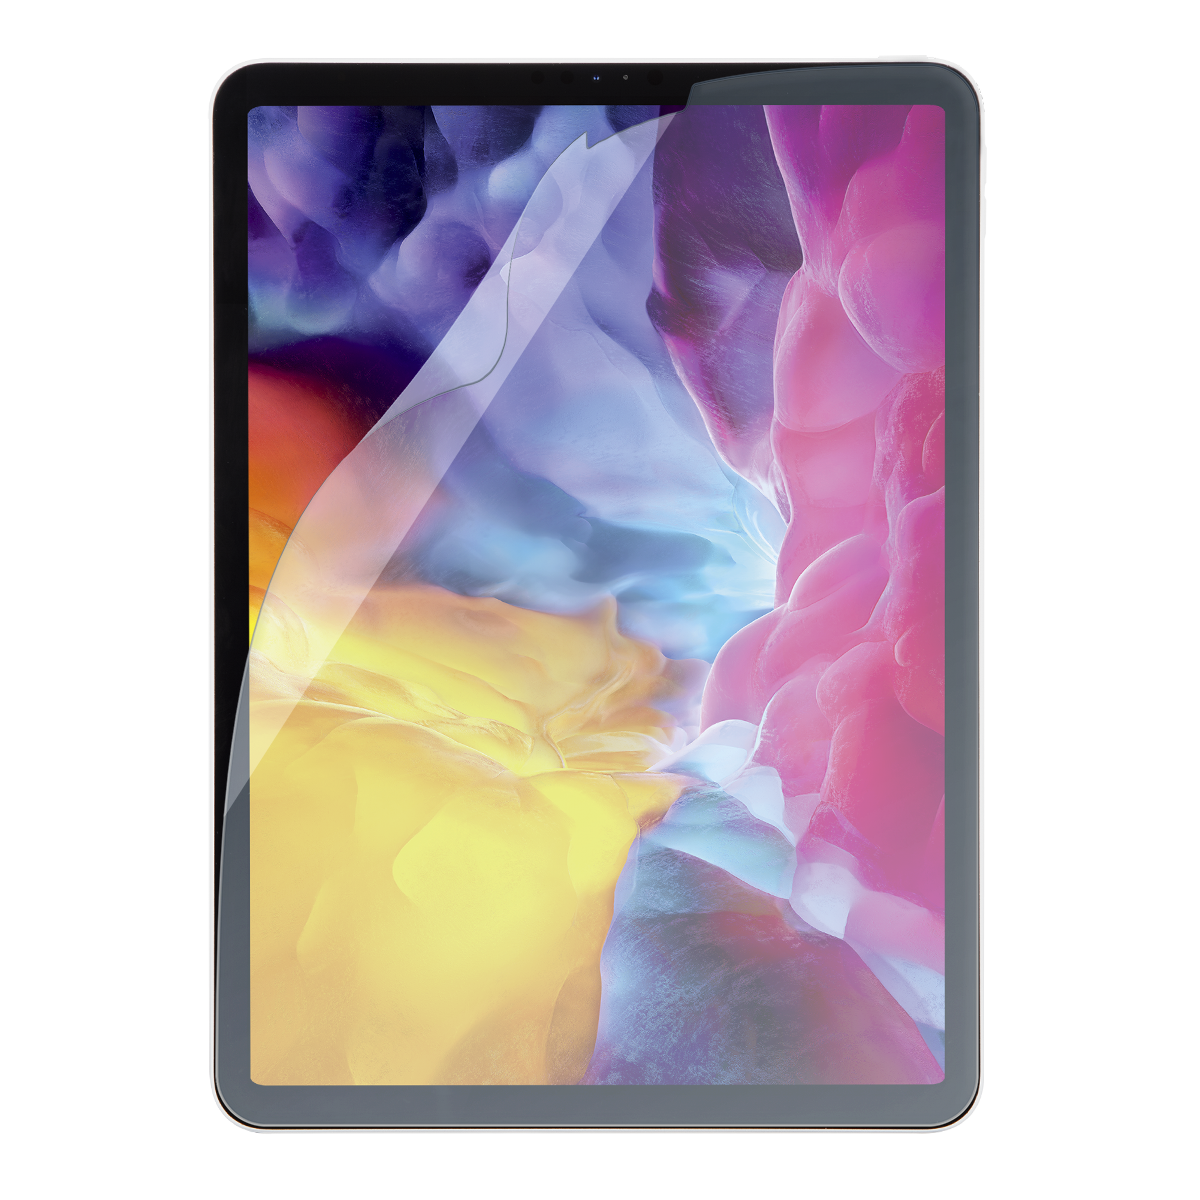 Komass iPad Air 4 10.9"/iPad Pro 11" Screen Protector, Clear